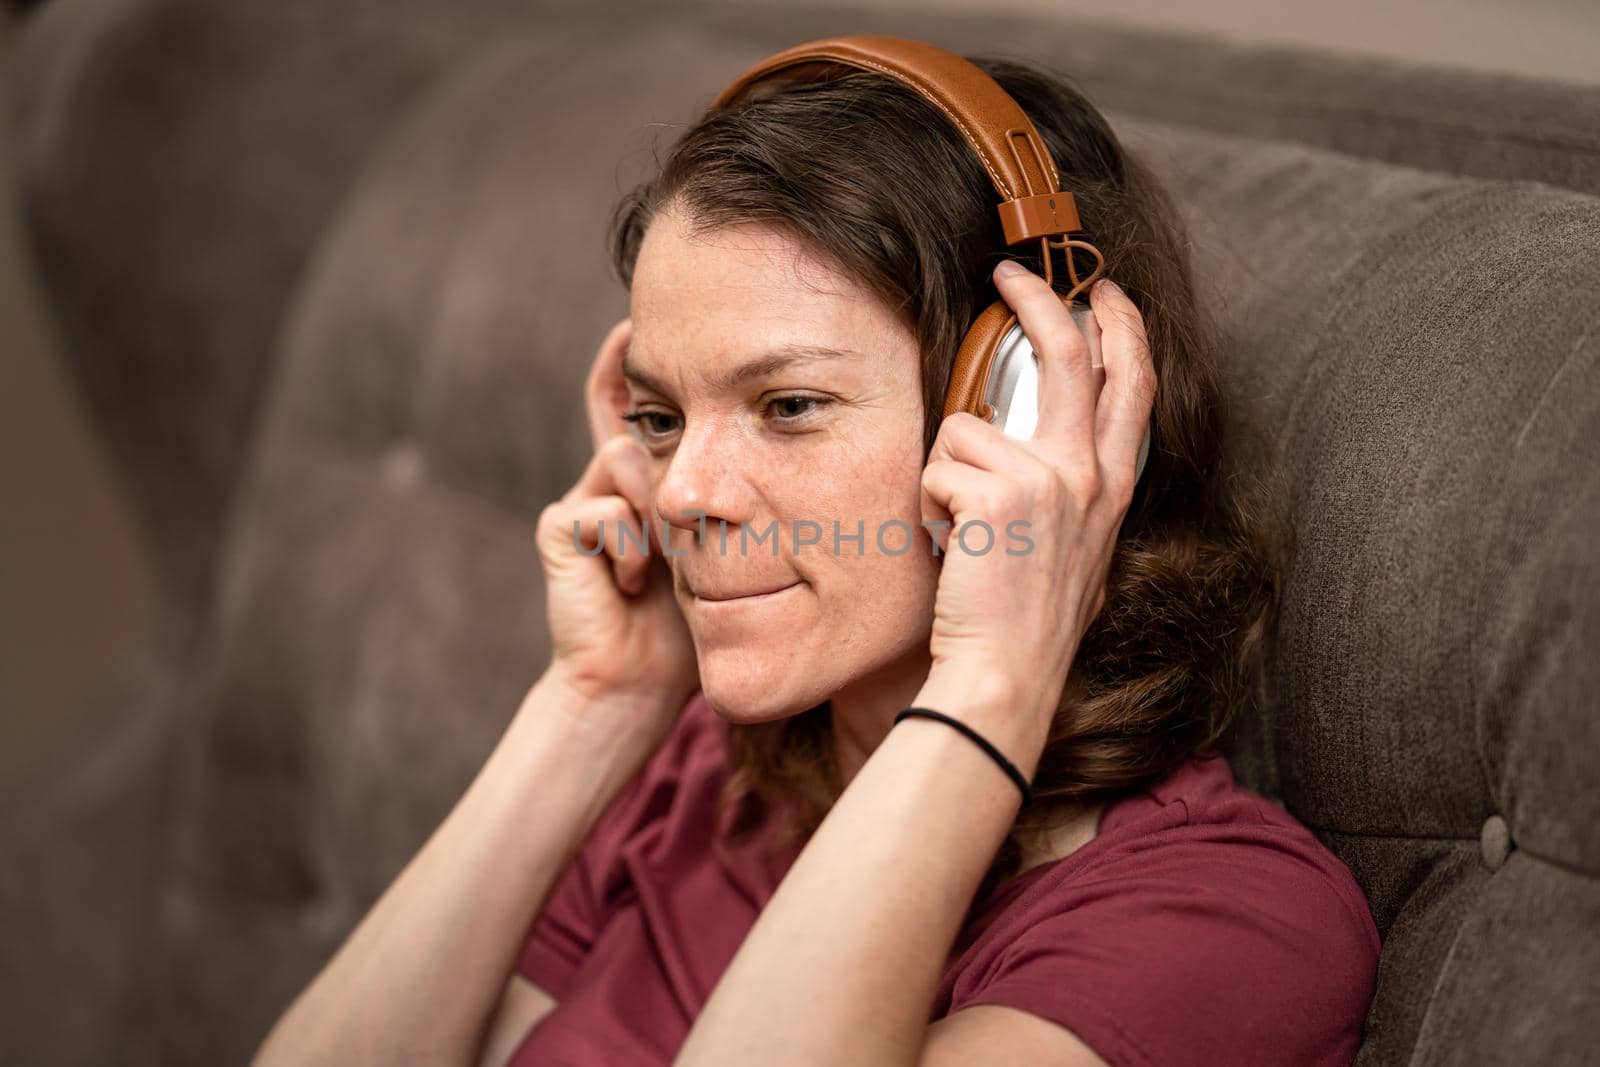 online music in wireless headphones by Edophoto